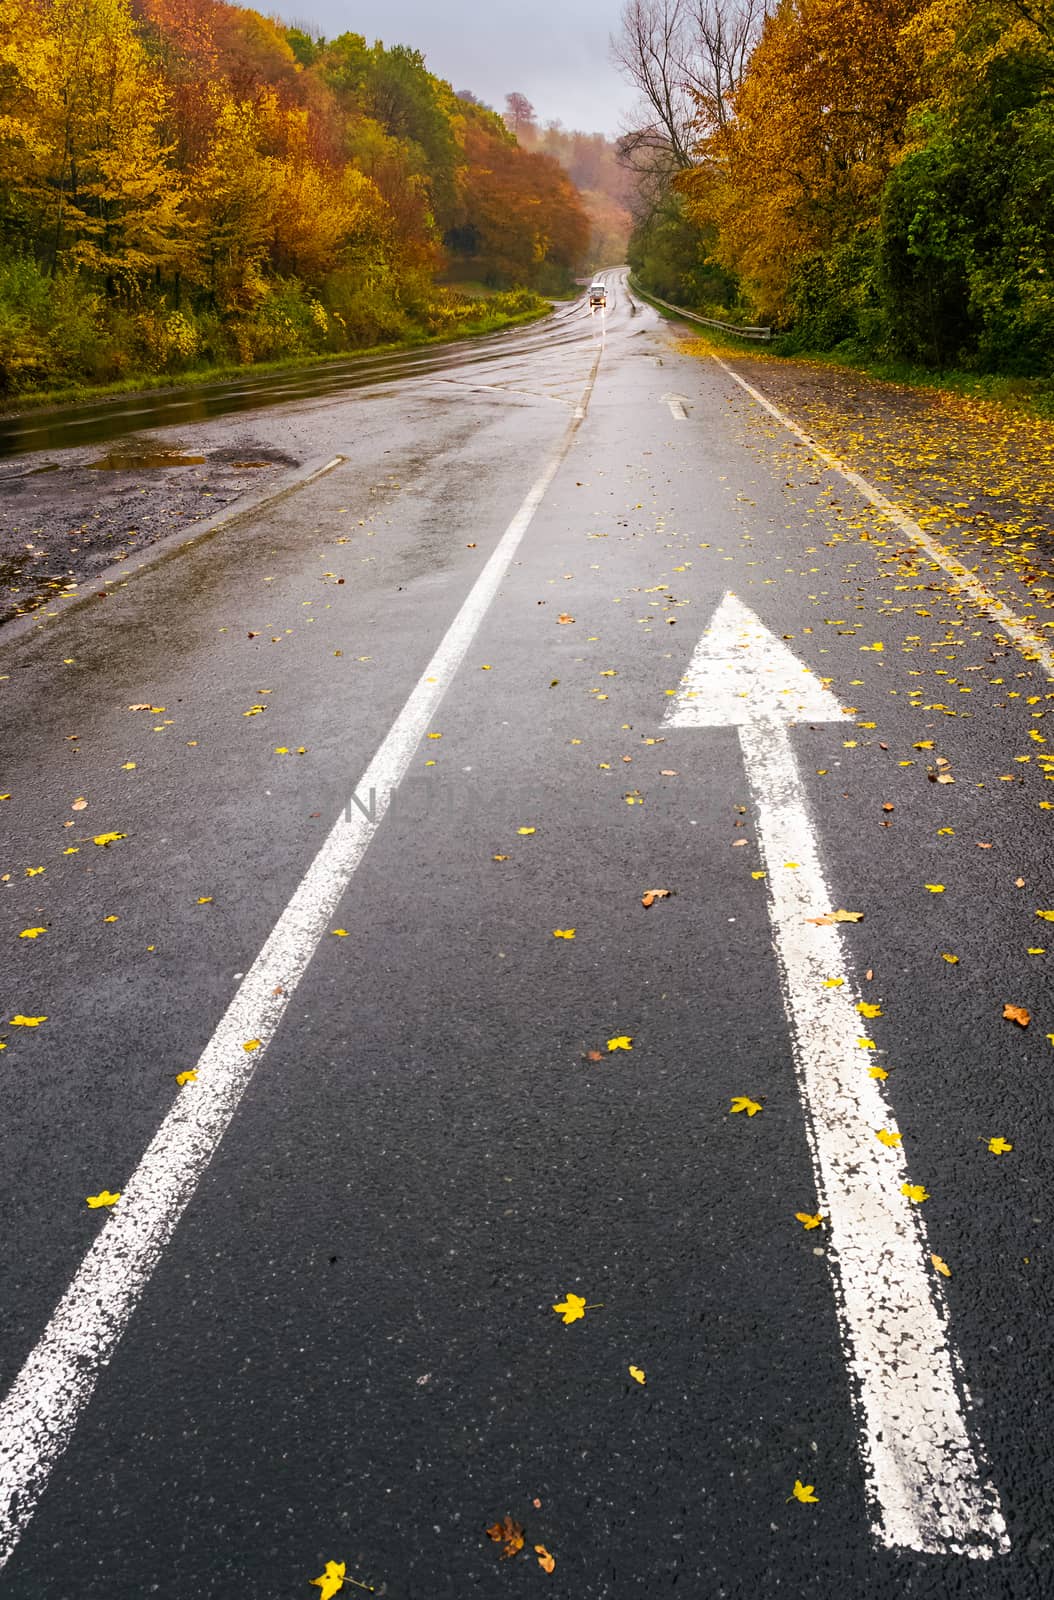 wet asphalt road through forest in deep autumn by Pellinni